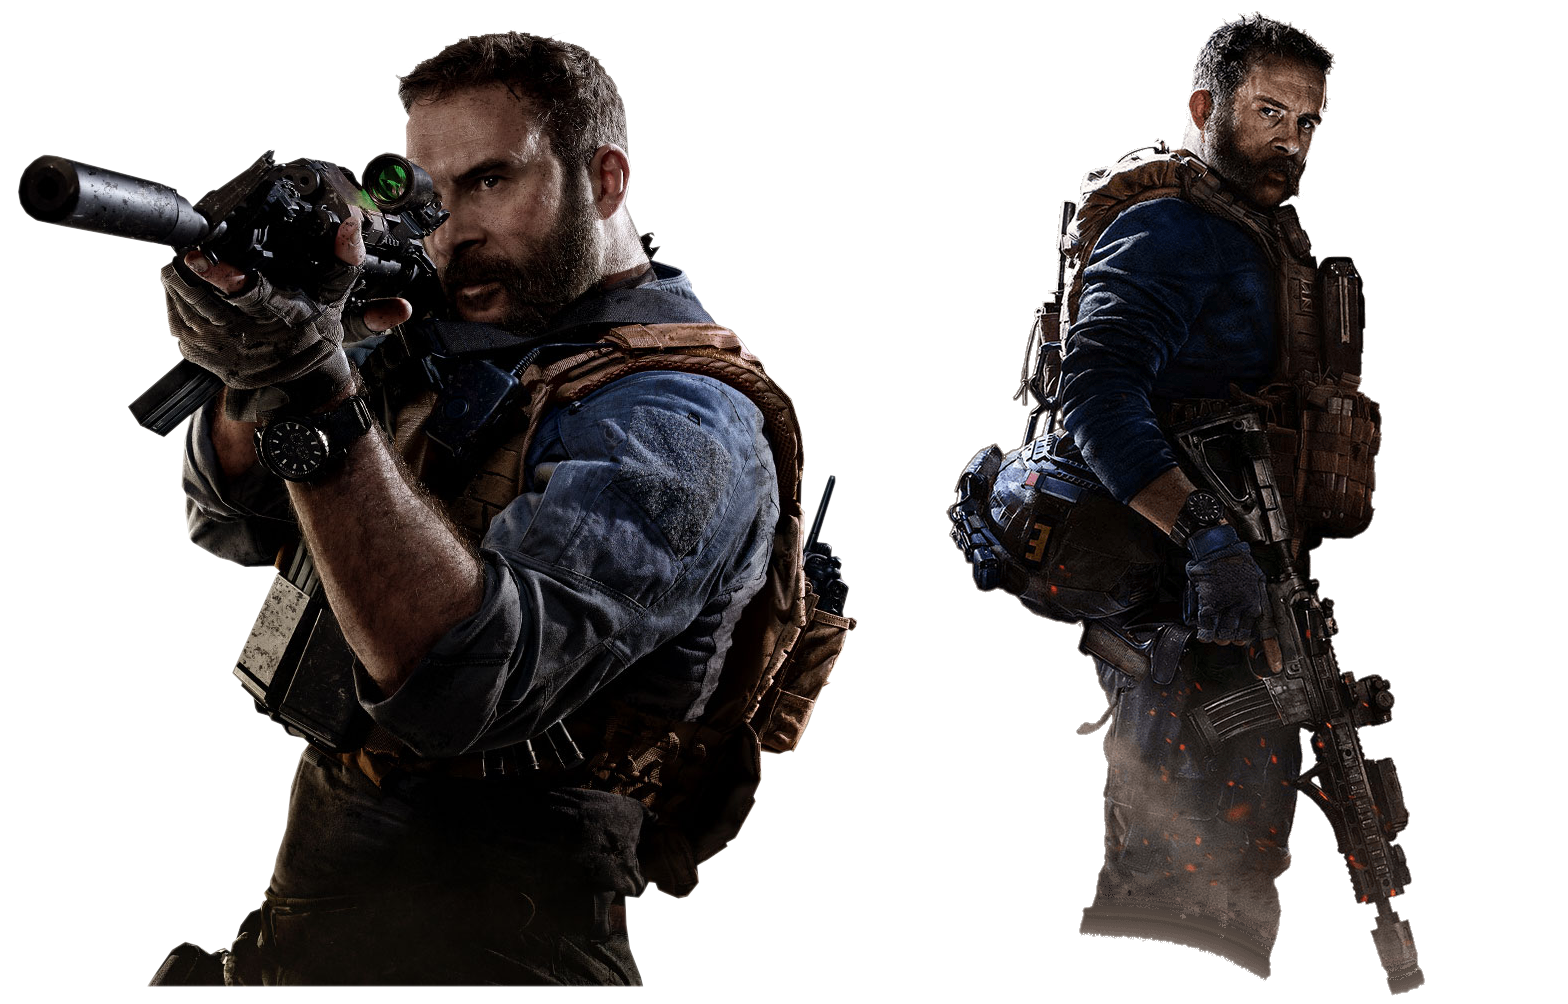 Call of Duty Modern Warfare Soldier imagens transparentes